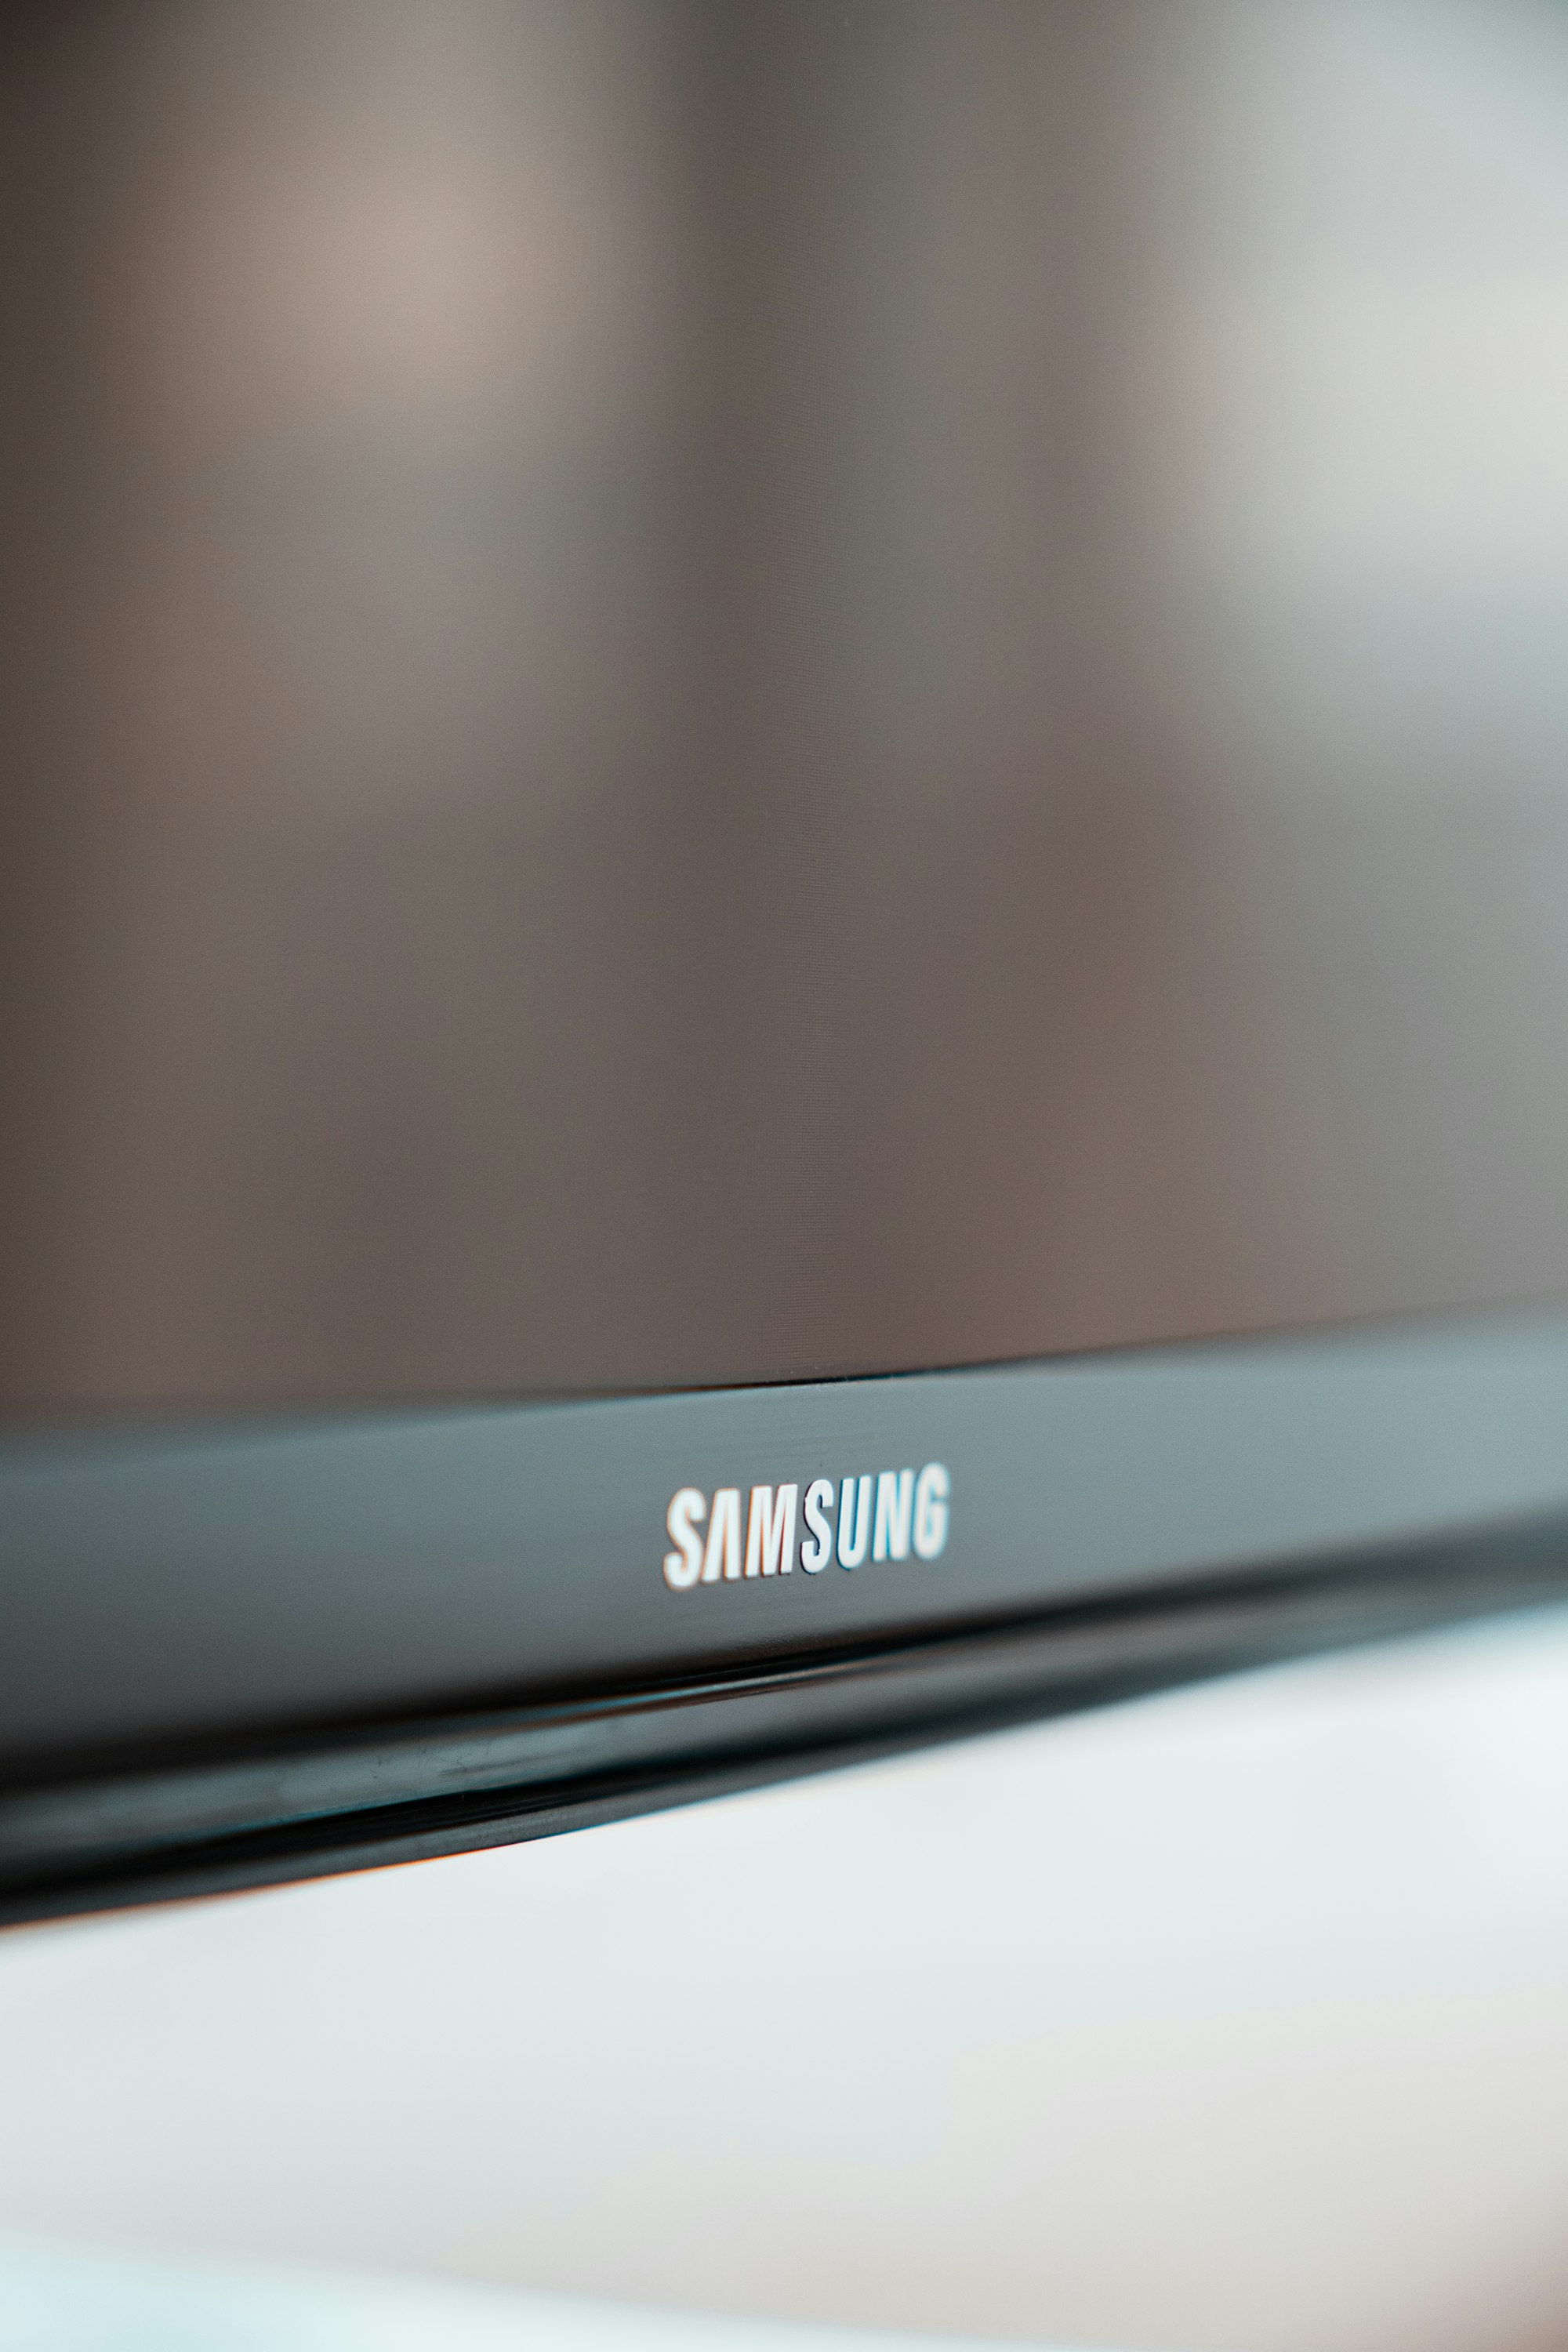 shallow focus photo of black Samsung flat screen TV